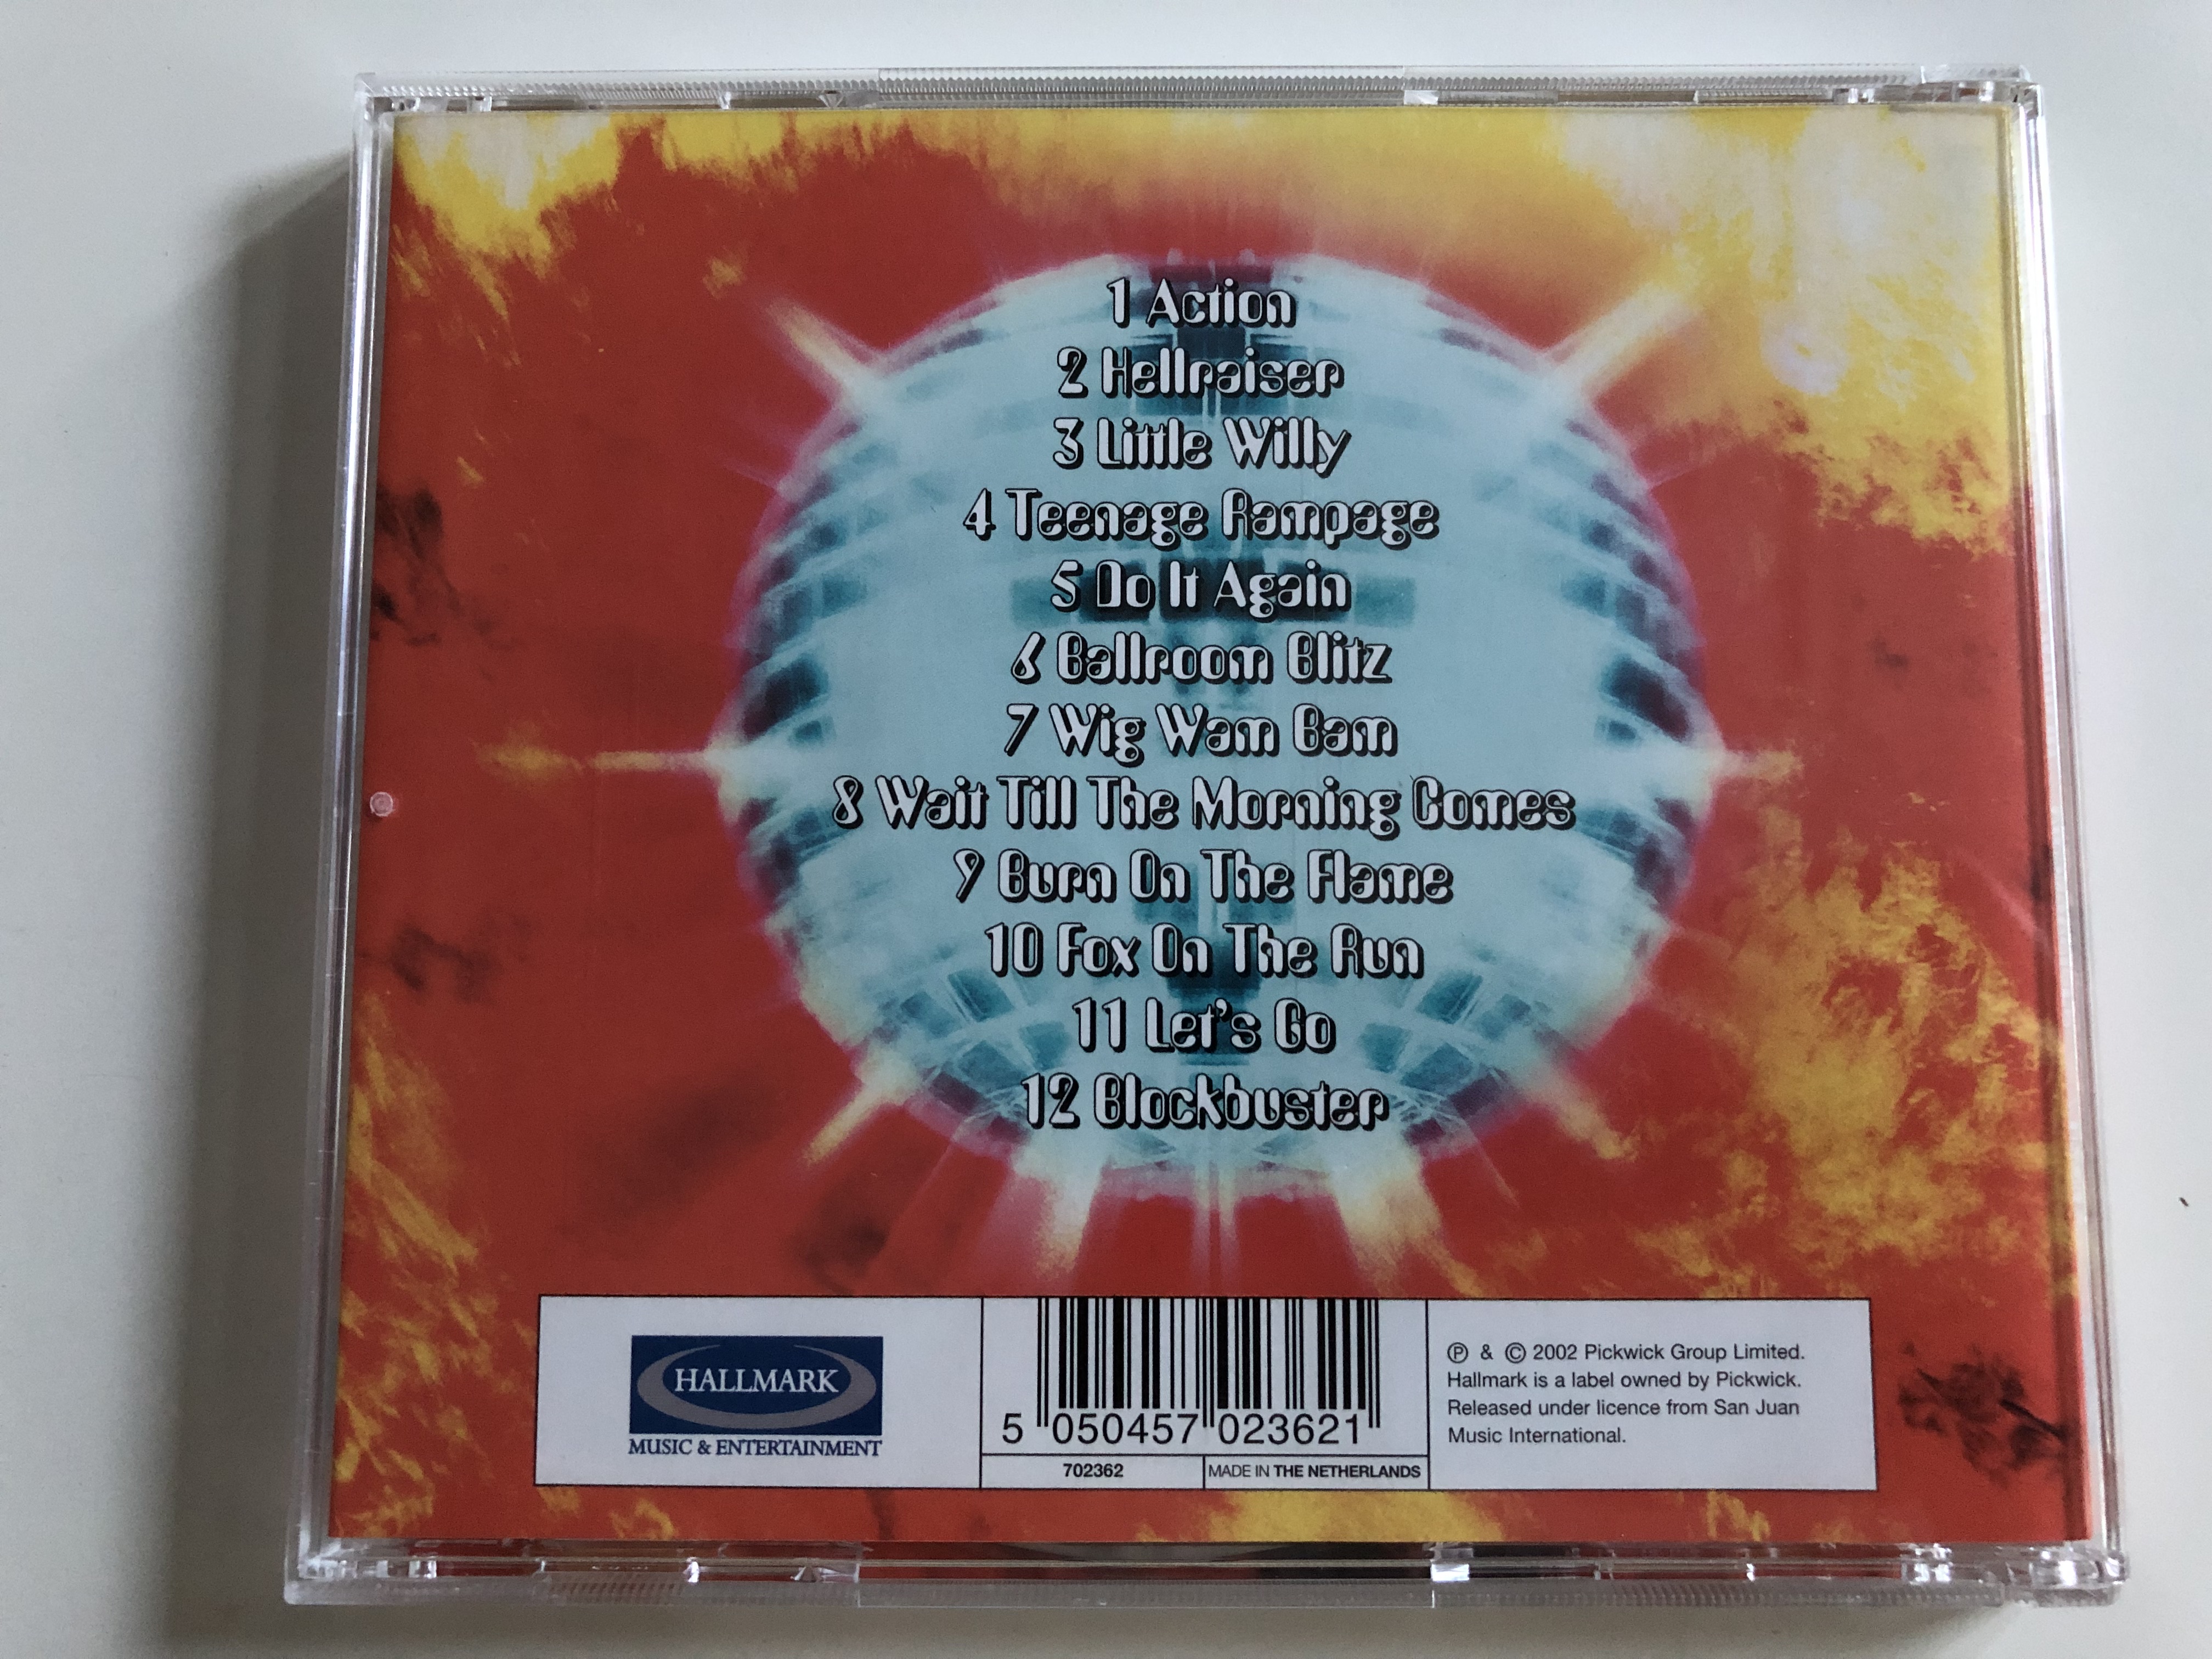 the-sweet-blockbusters-12-blockbusting-hits-featuring-brian-connolly-hallmark-music-audio-cd-2002-702362-5-.jpg